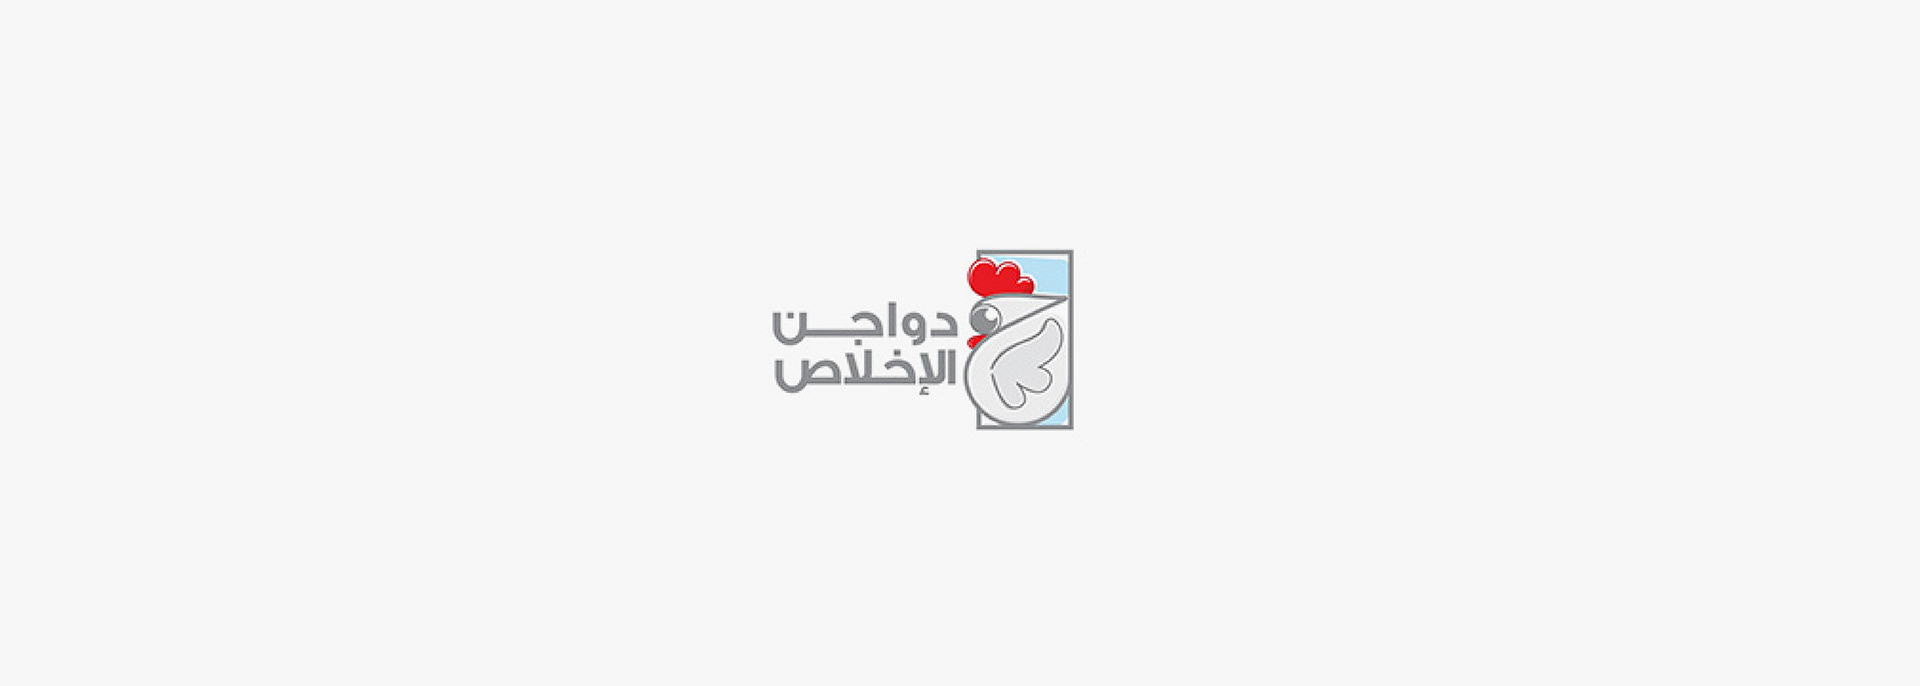 ARAB logo collection